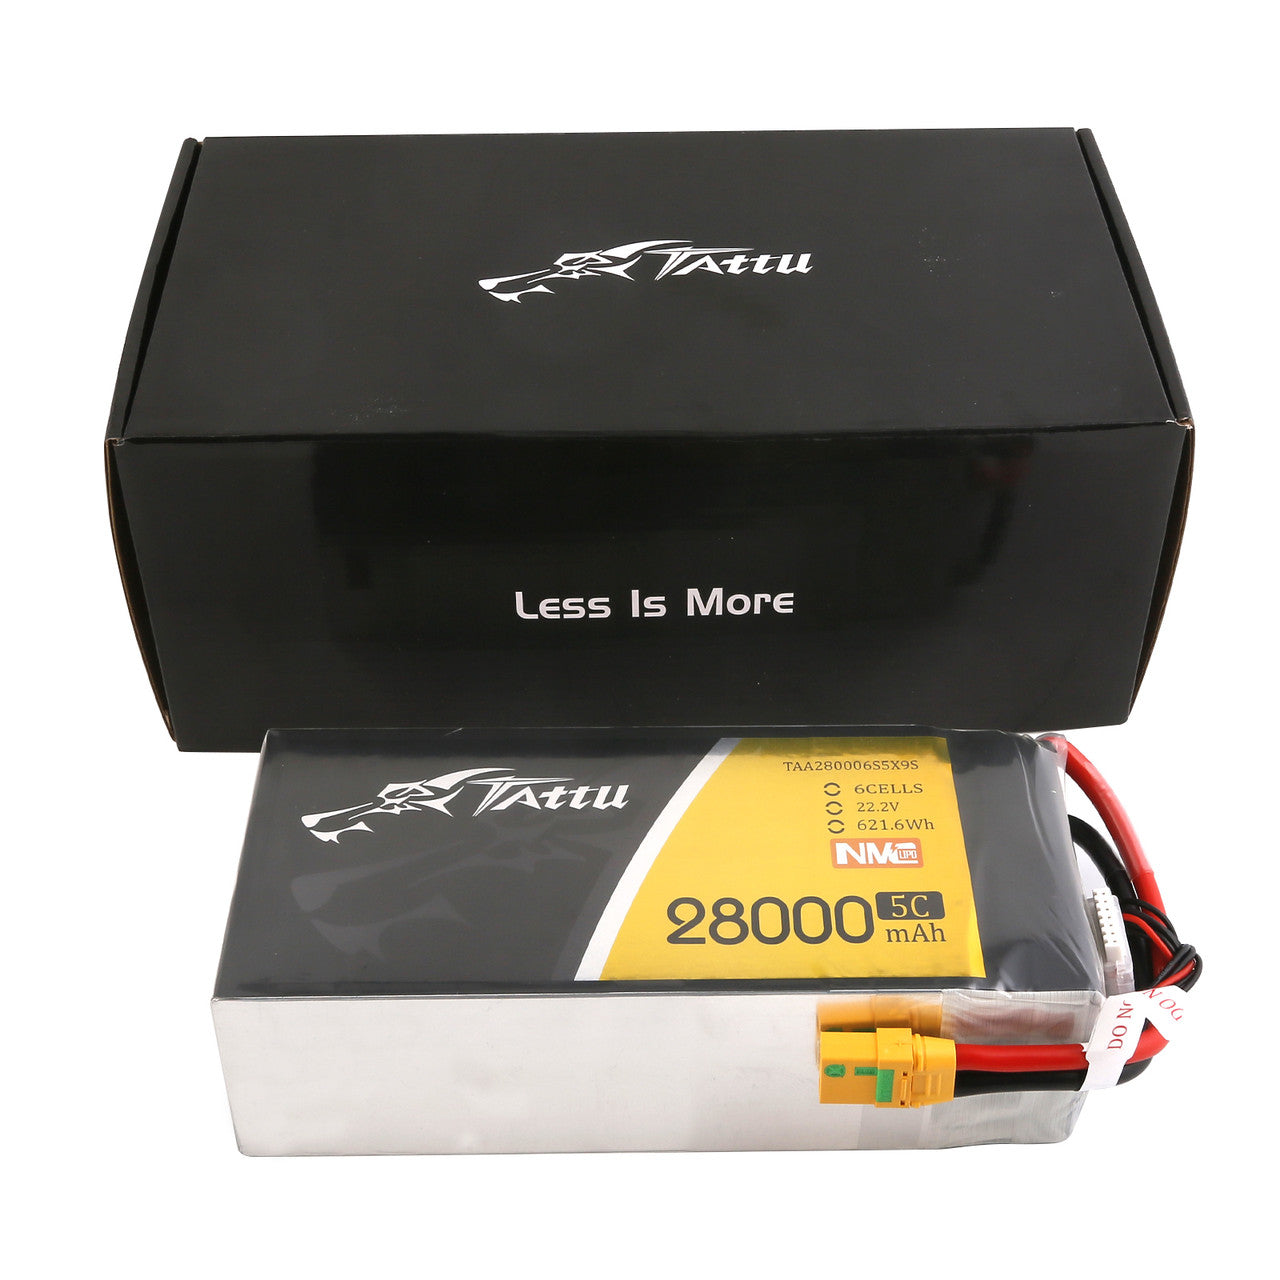 Tattu 28000mAh 6S 5C 22.2V NMC Lipo Battery, Battery pack with 28,000mAh capacity, 5C charging, and XT90S plug for demanding uses.